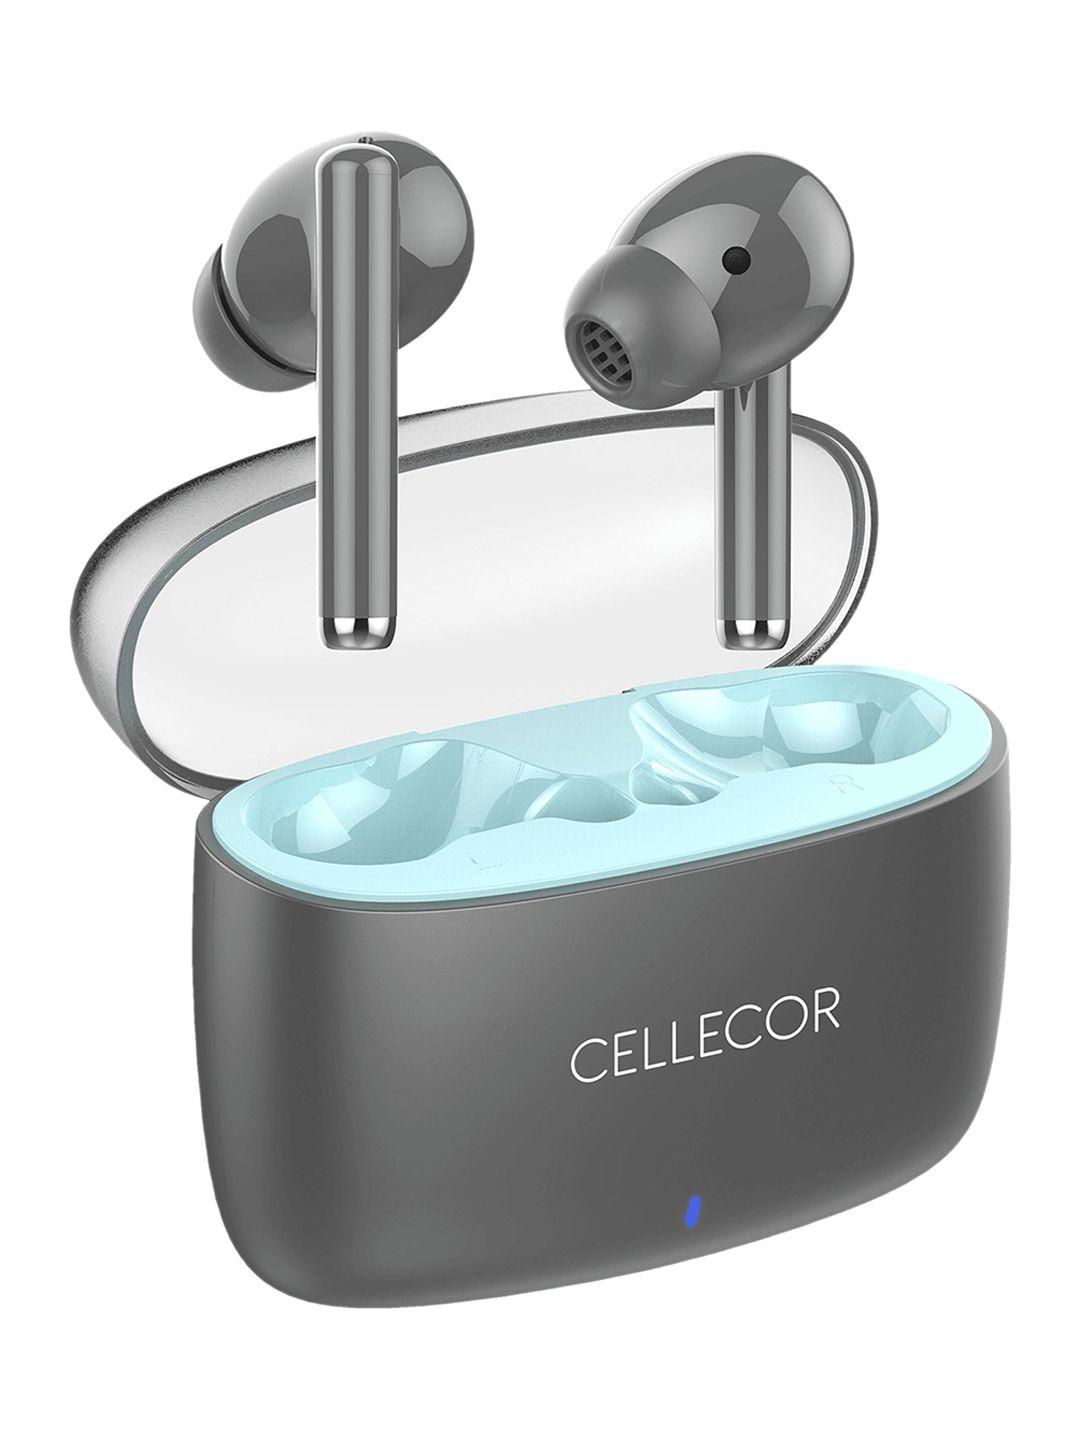 Cellecor Bropods CB11 True Wireless Earbuds